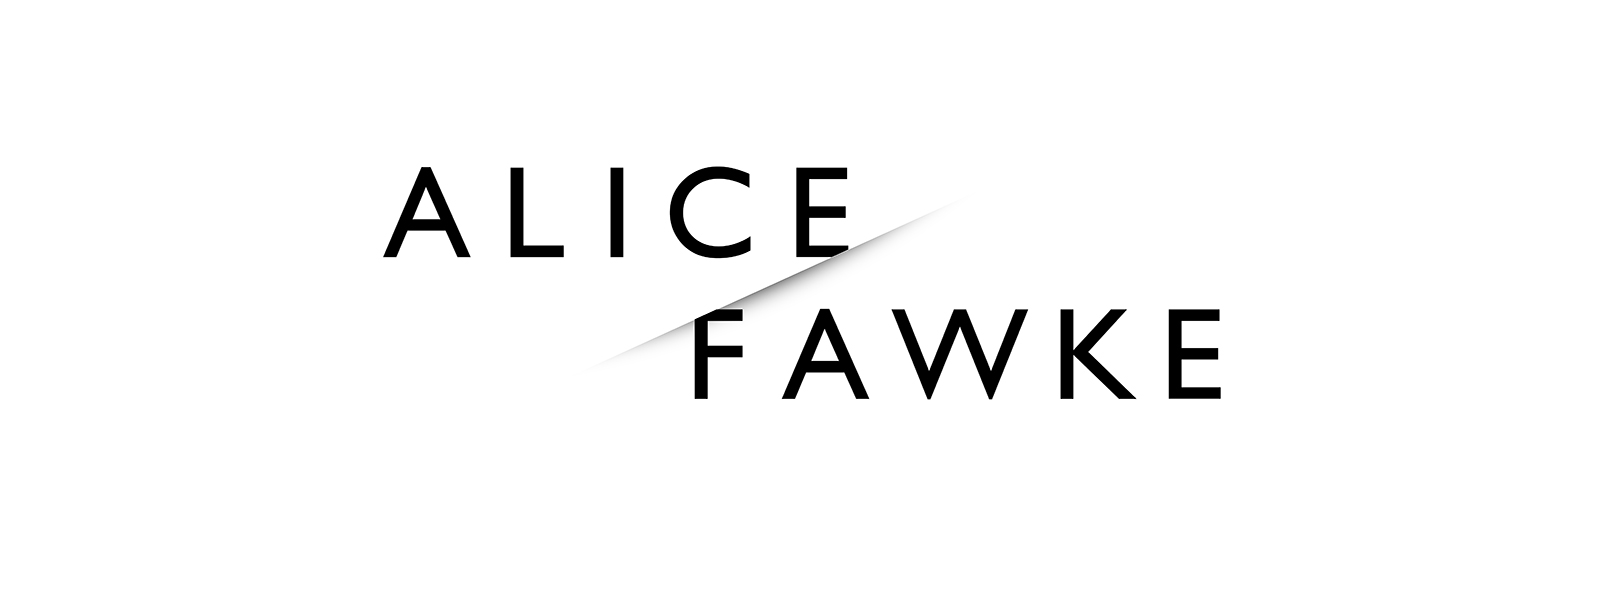 AliceFawke-logo-whiteback